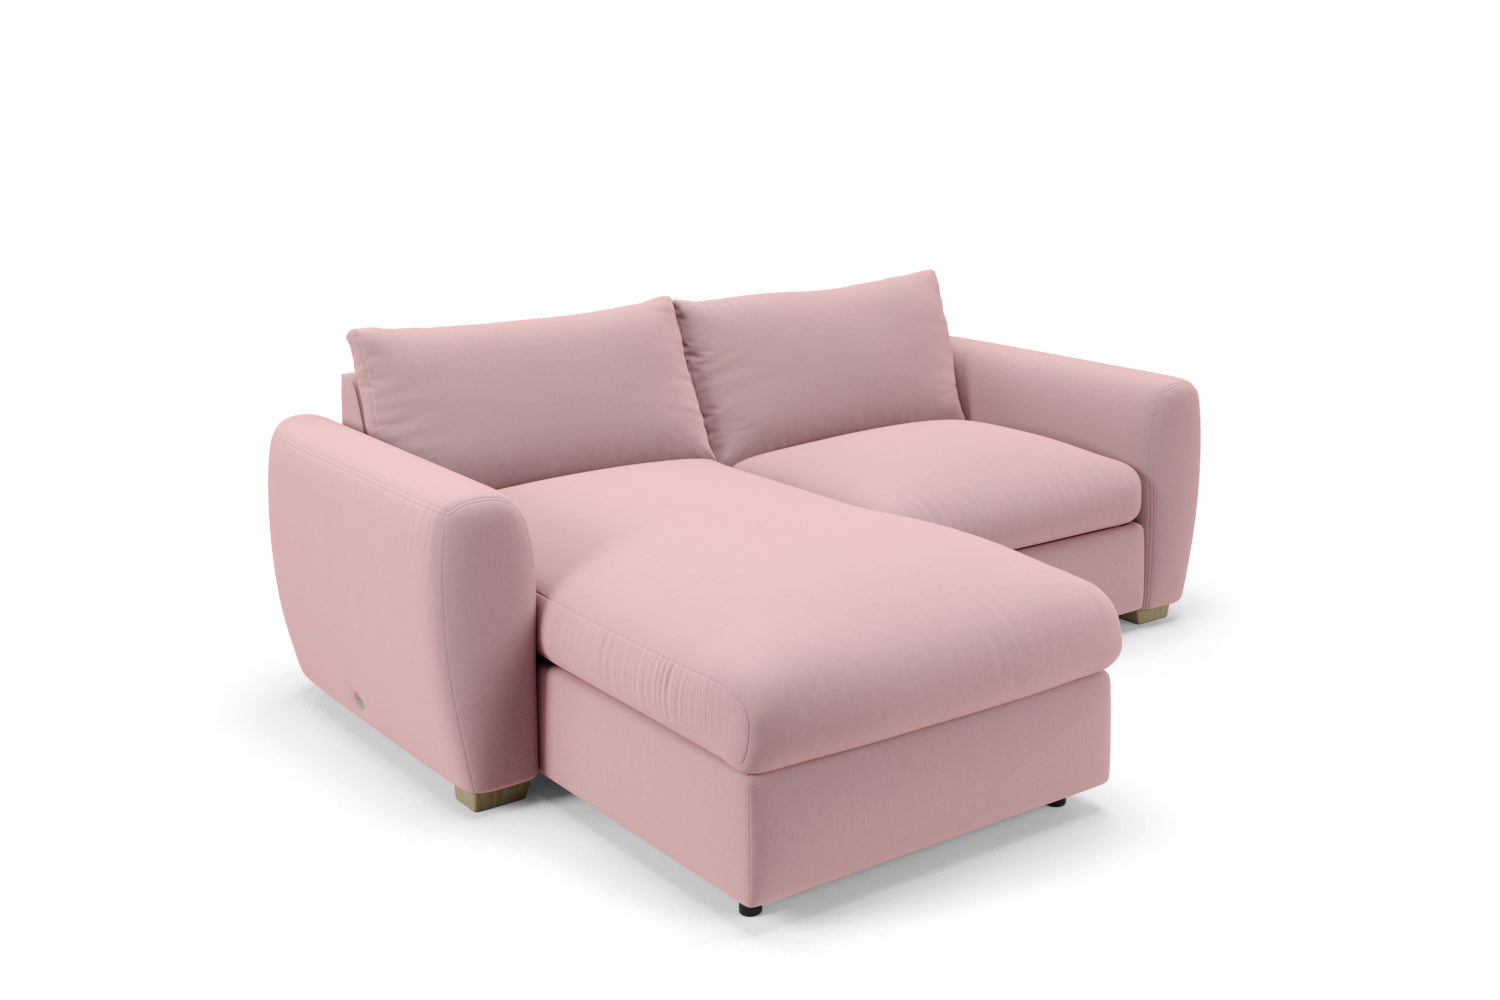 SNUG | The Cloud Sundae Chaise Corner Sofa in Blush